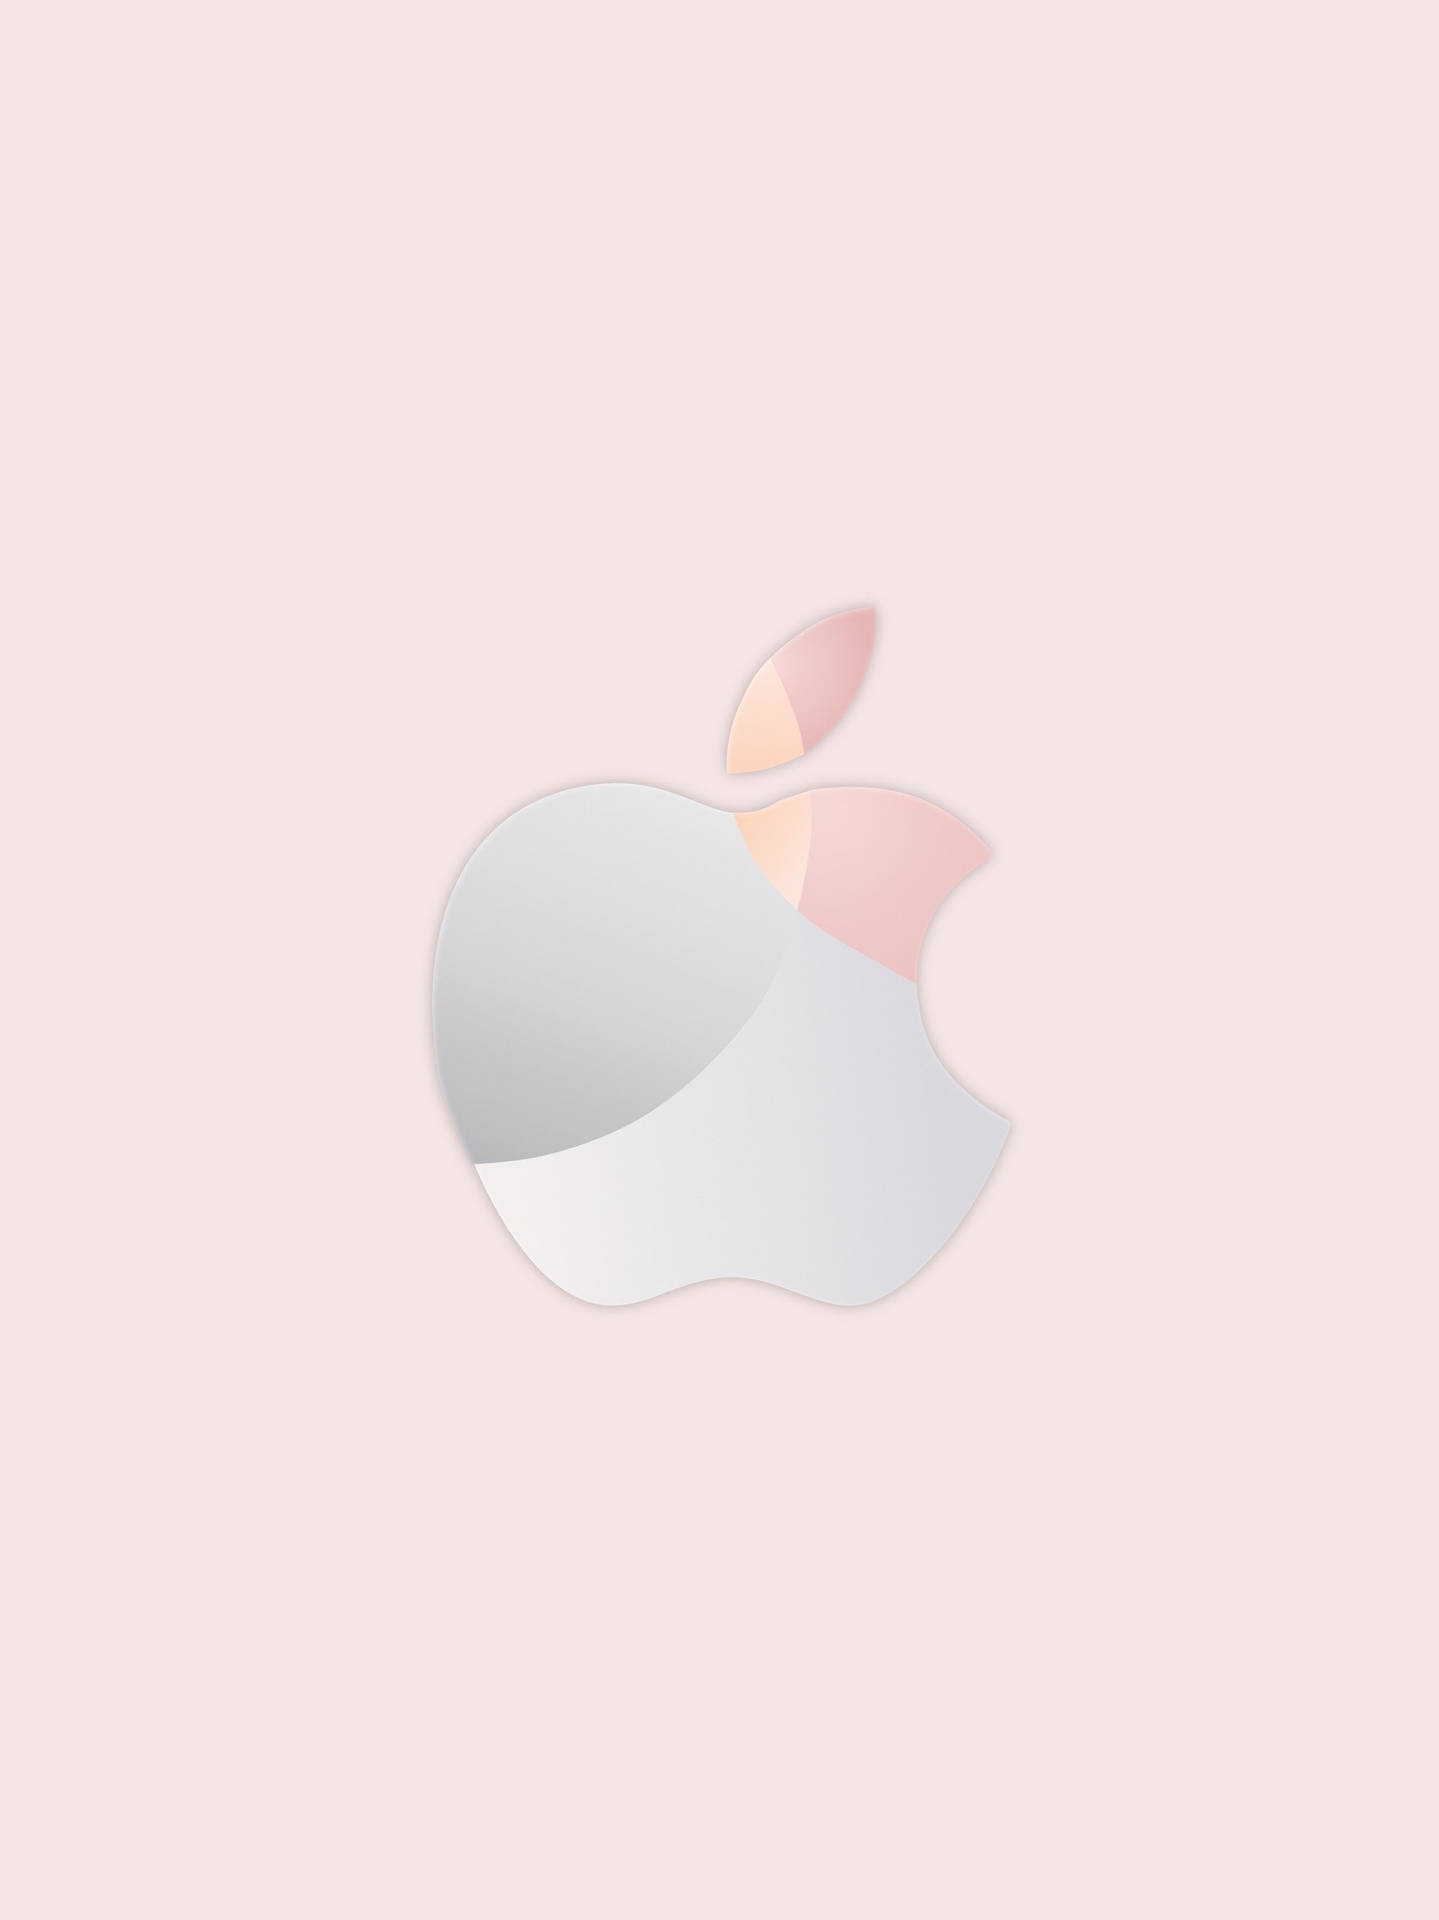 Rose Gold iPad Simple Apple Logo Wallpaper